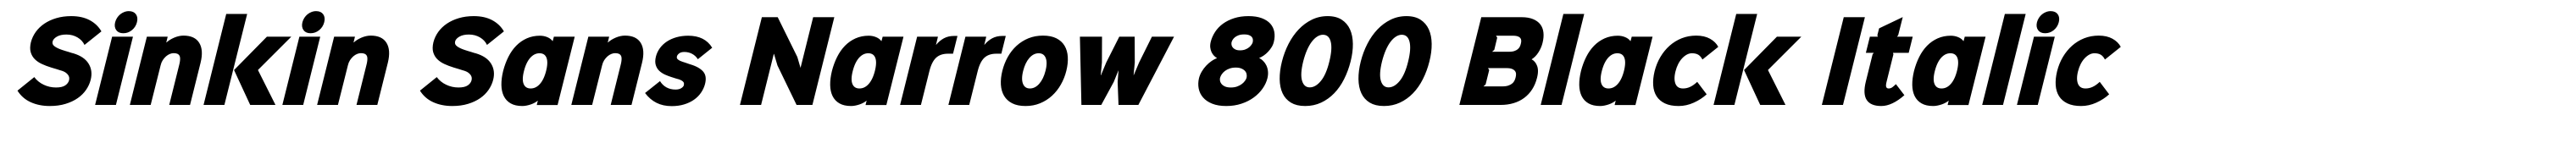 Sinkin Sans Narrow 800 Black Italic